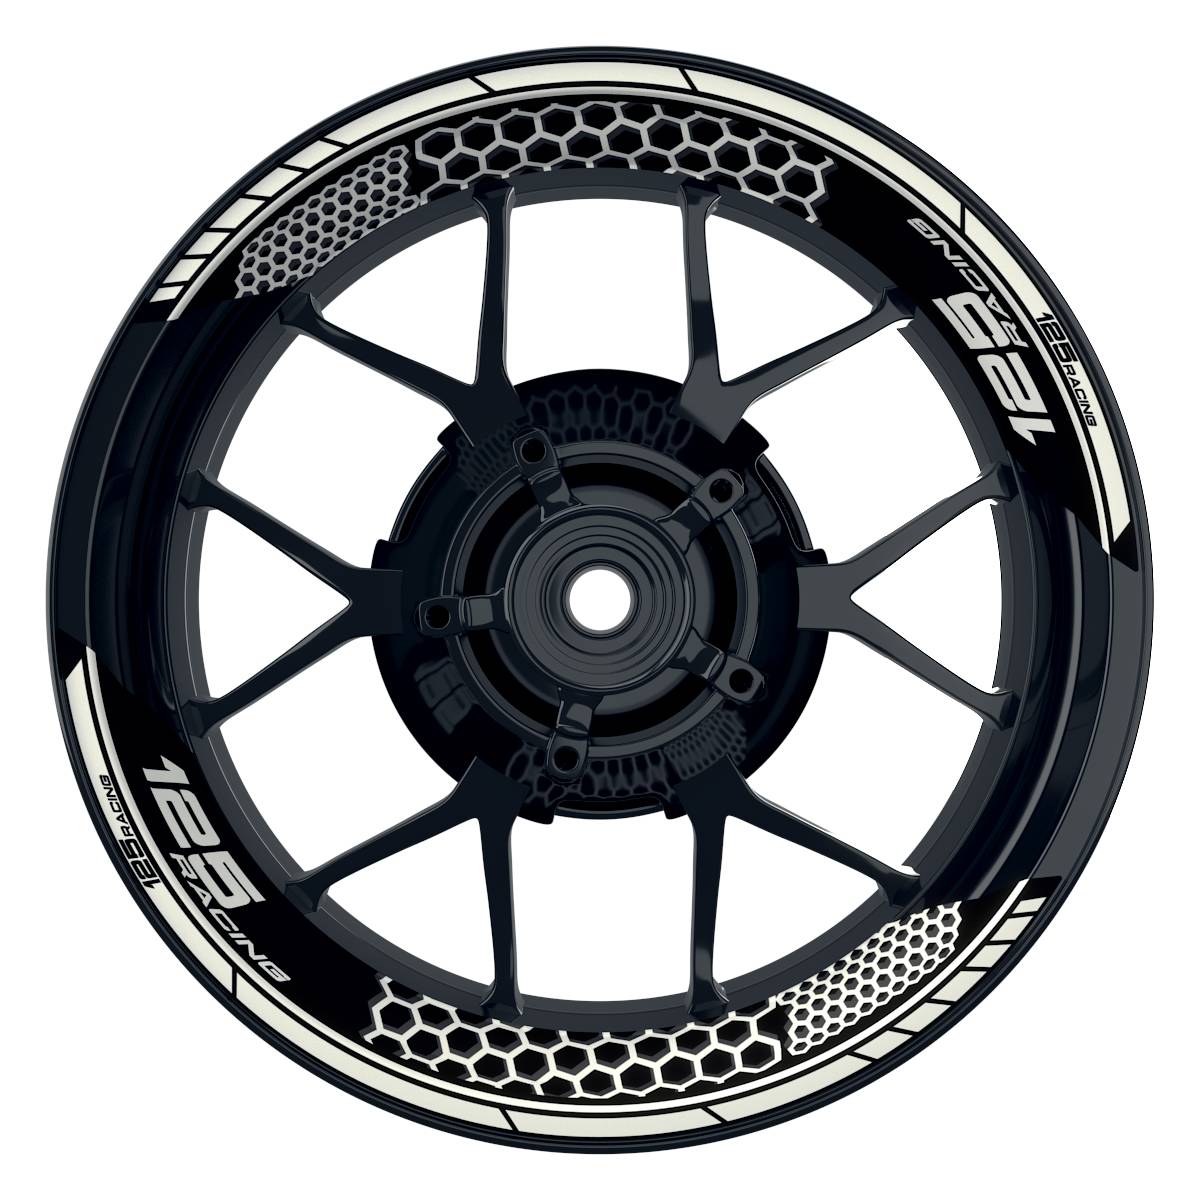 KTM Racing 125 Hexagon schwarz weiss Frontansicht